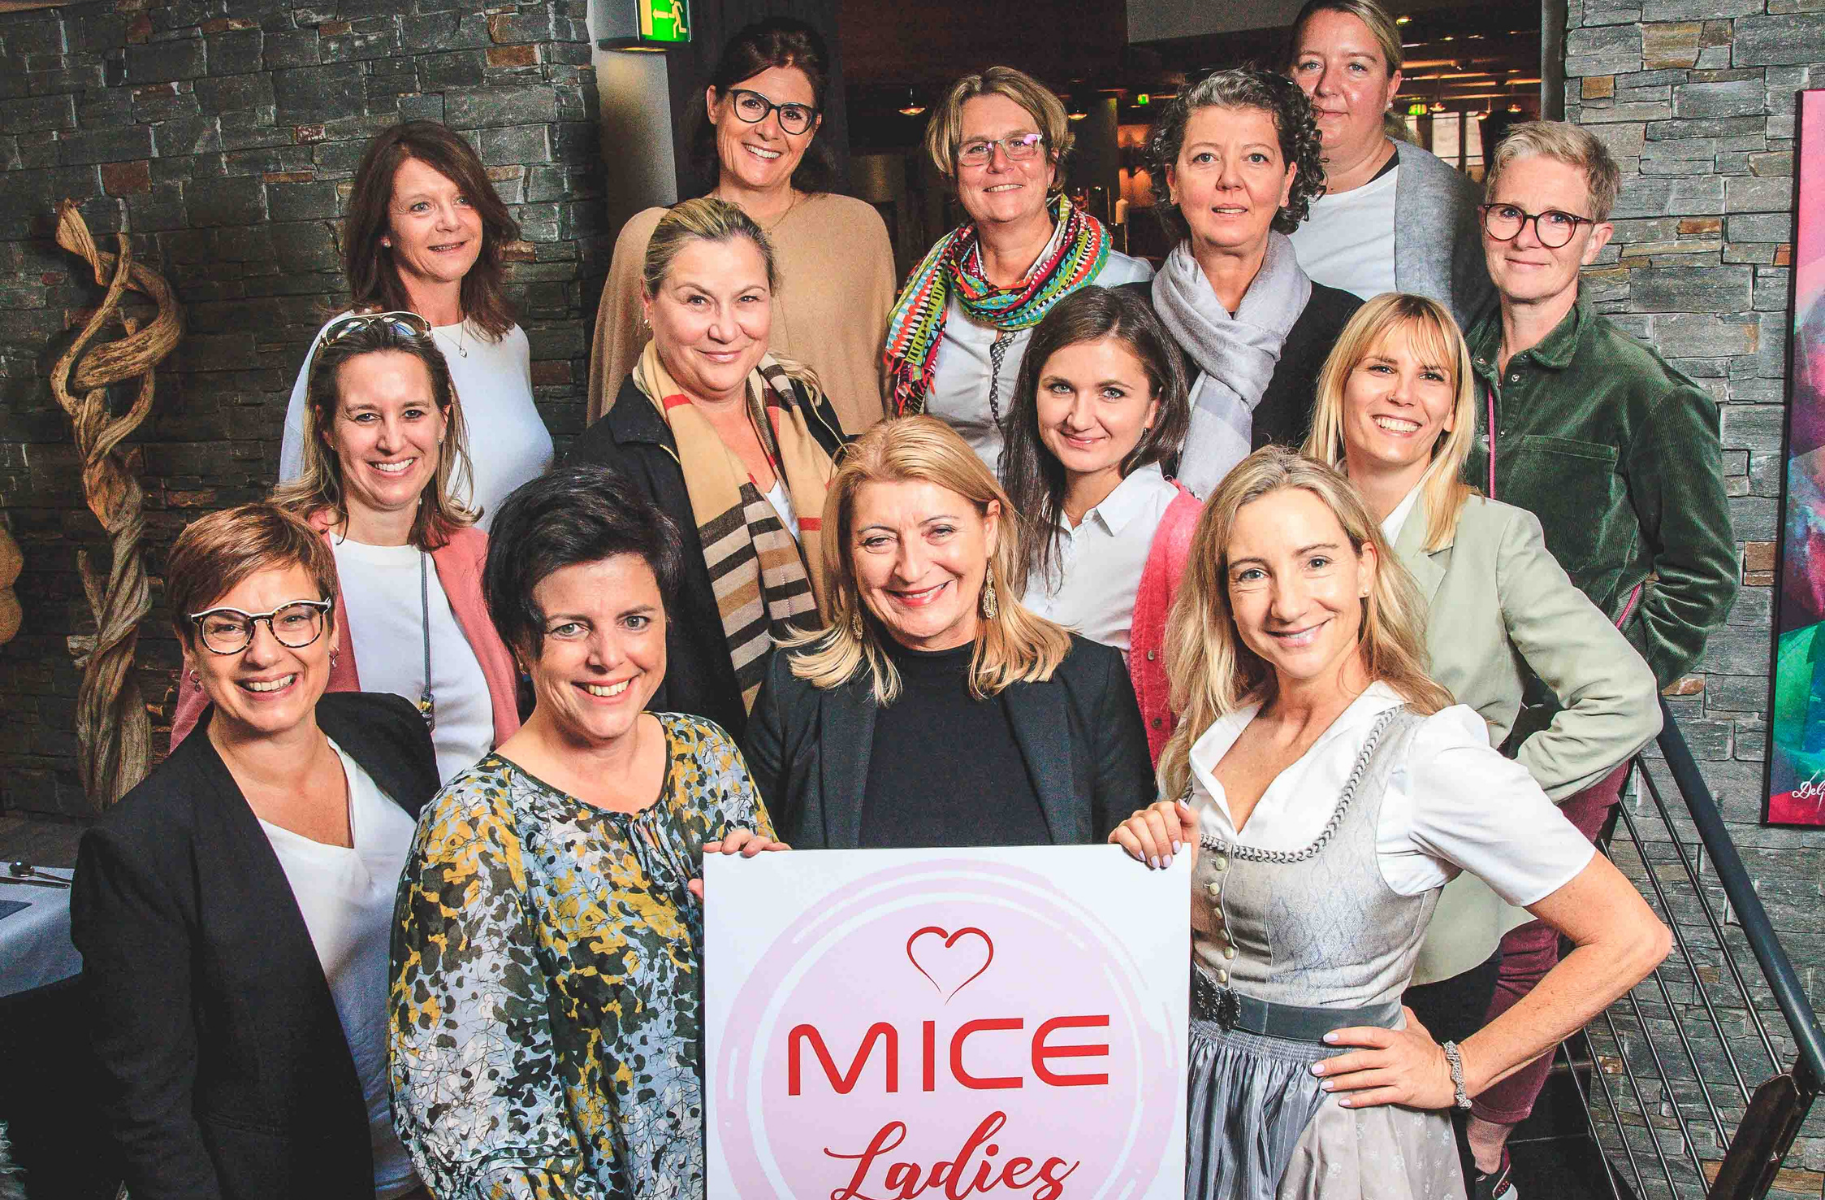 Ein voller Erfolg: der MICE Ladies SHEROES TRIP in Innsbruck